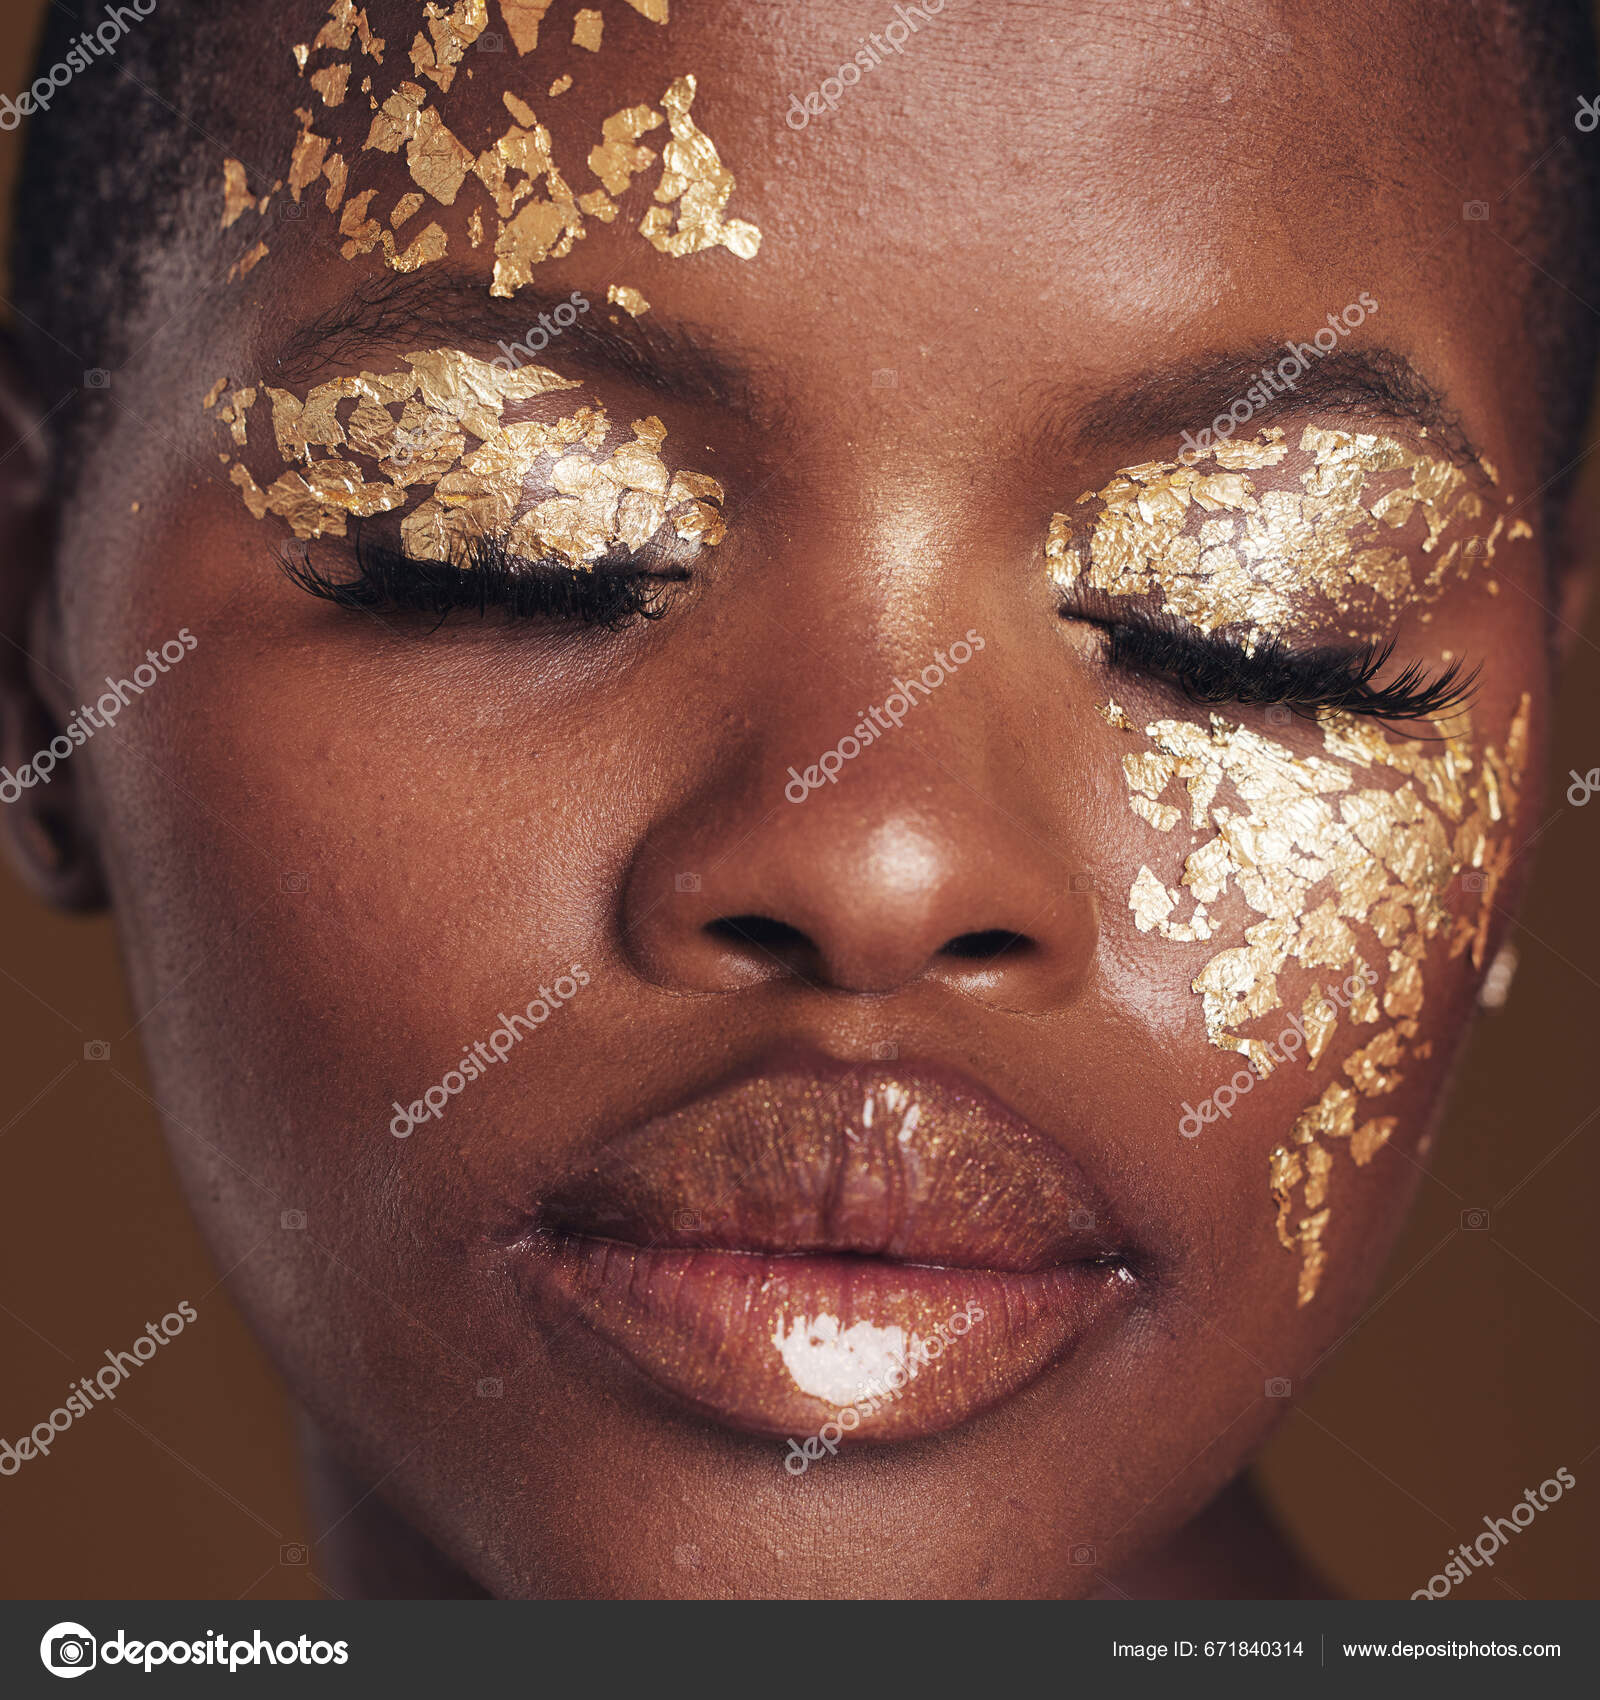 Bling Gold Glitter – SFXC